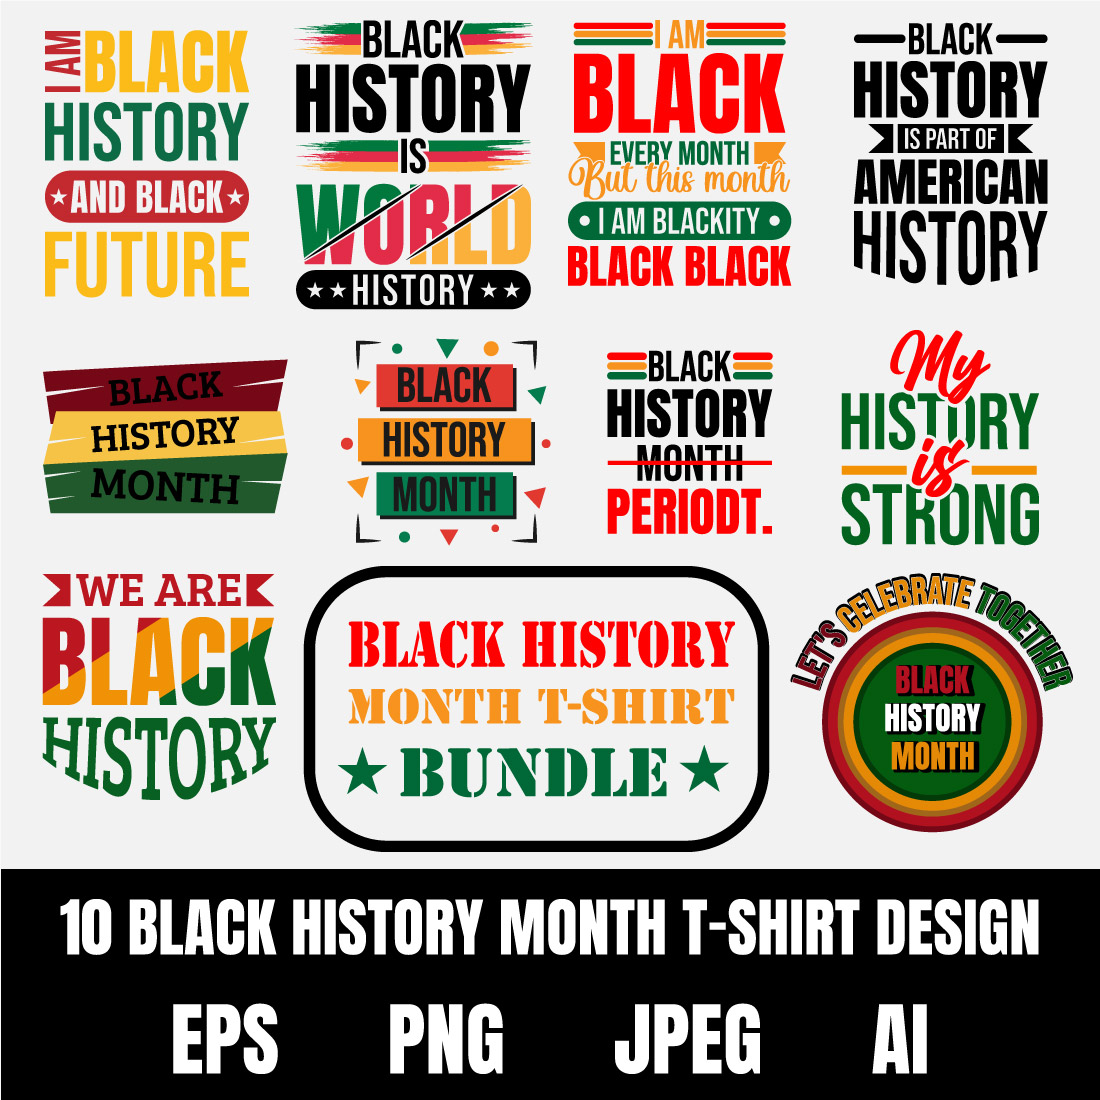 10 black history month taypograpy t-shirt design bundle preview image.